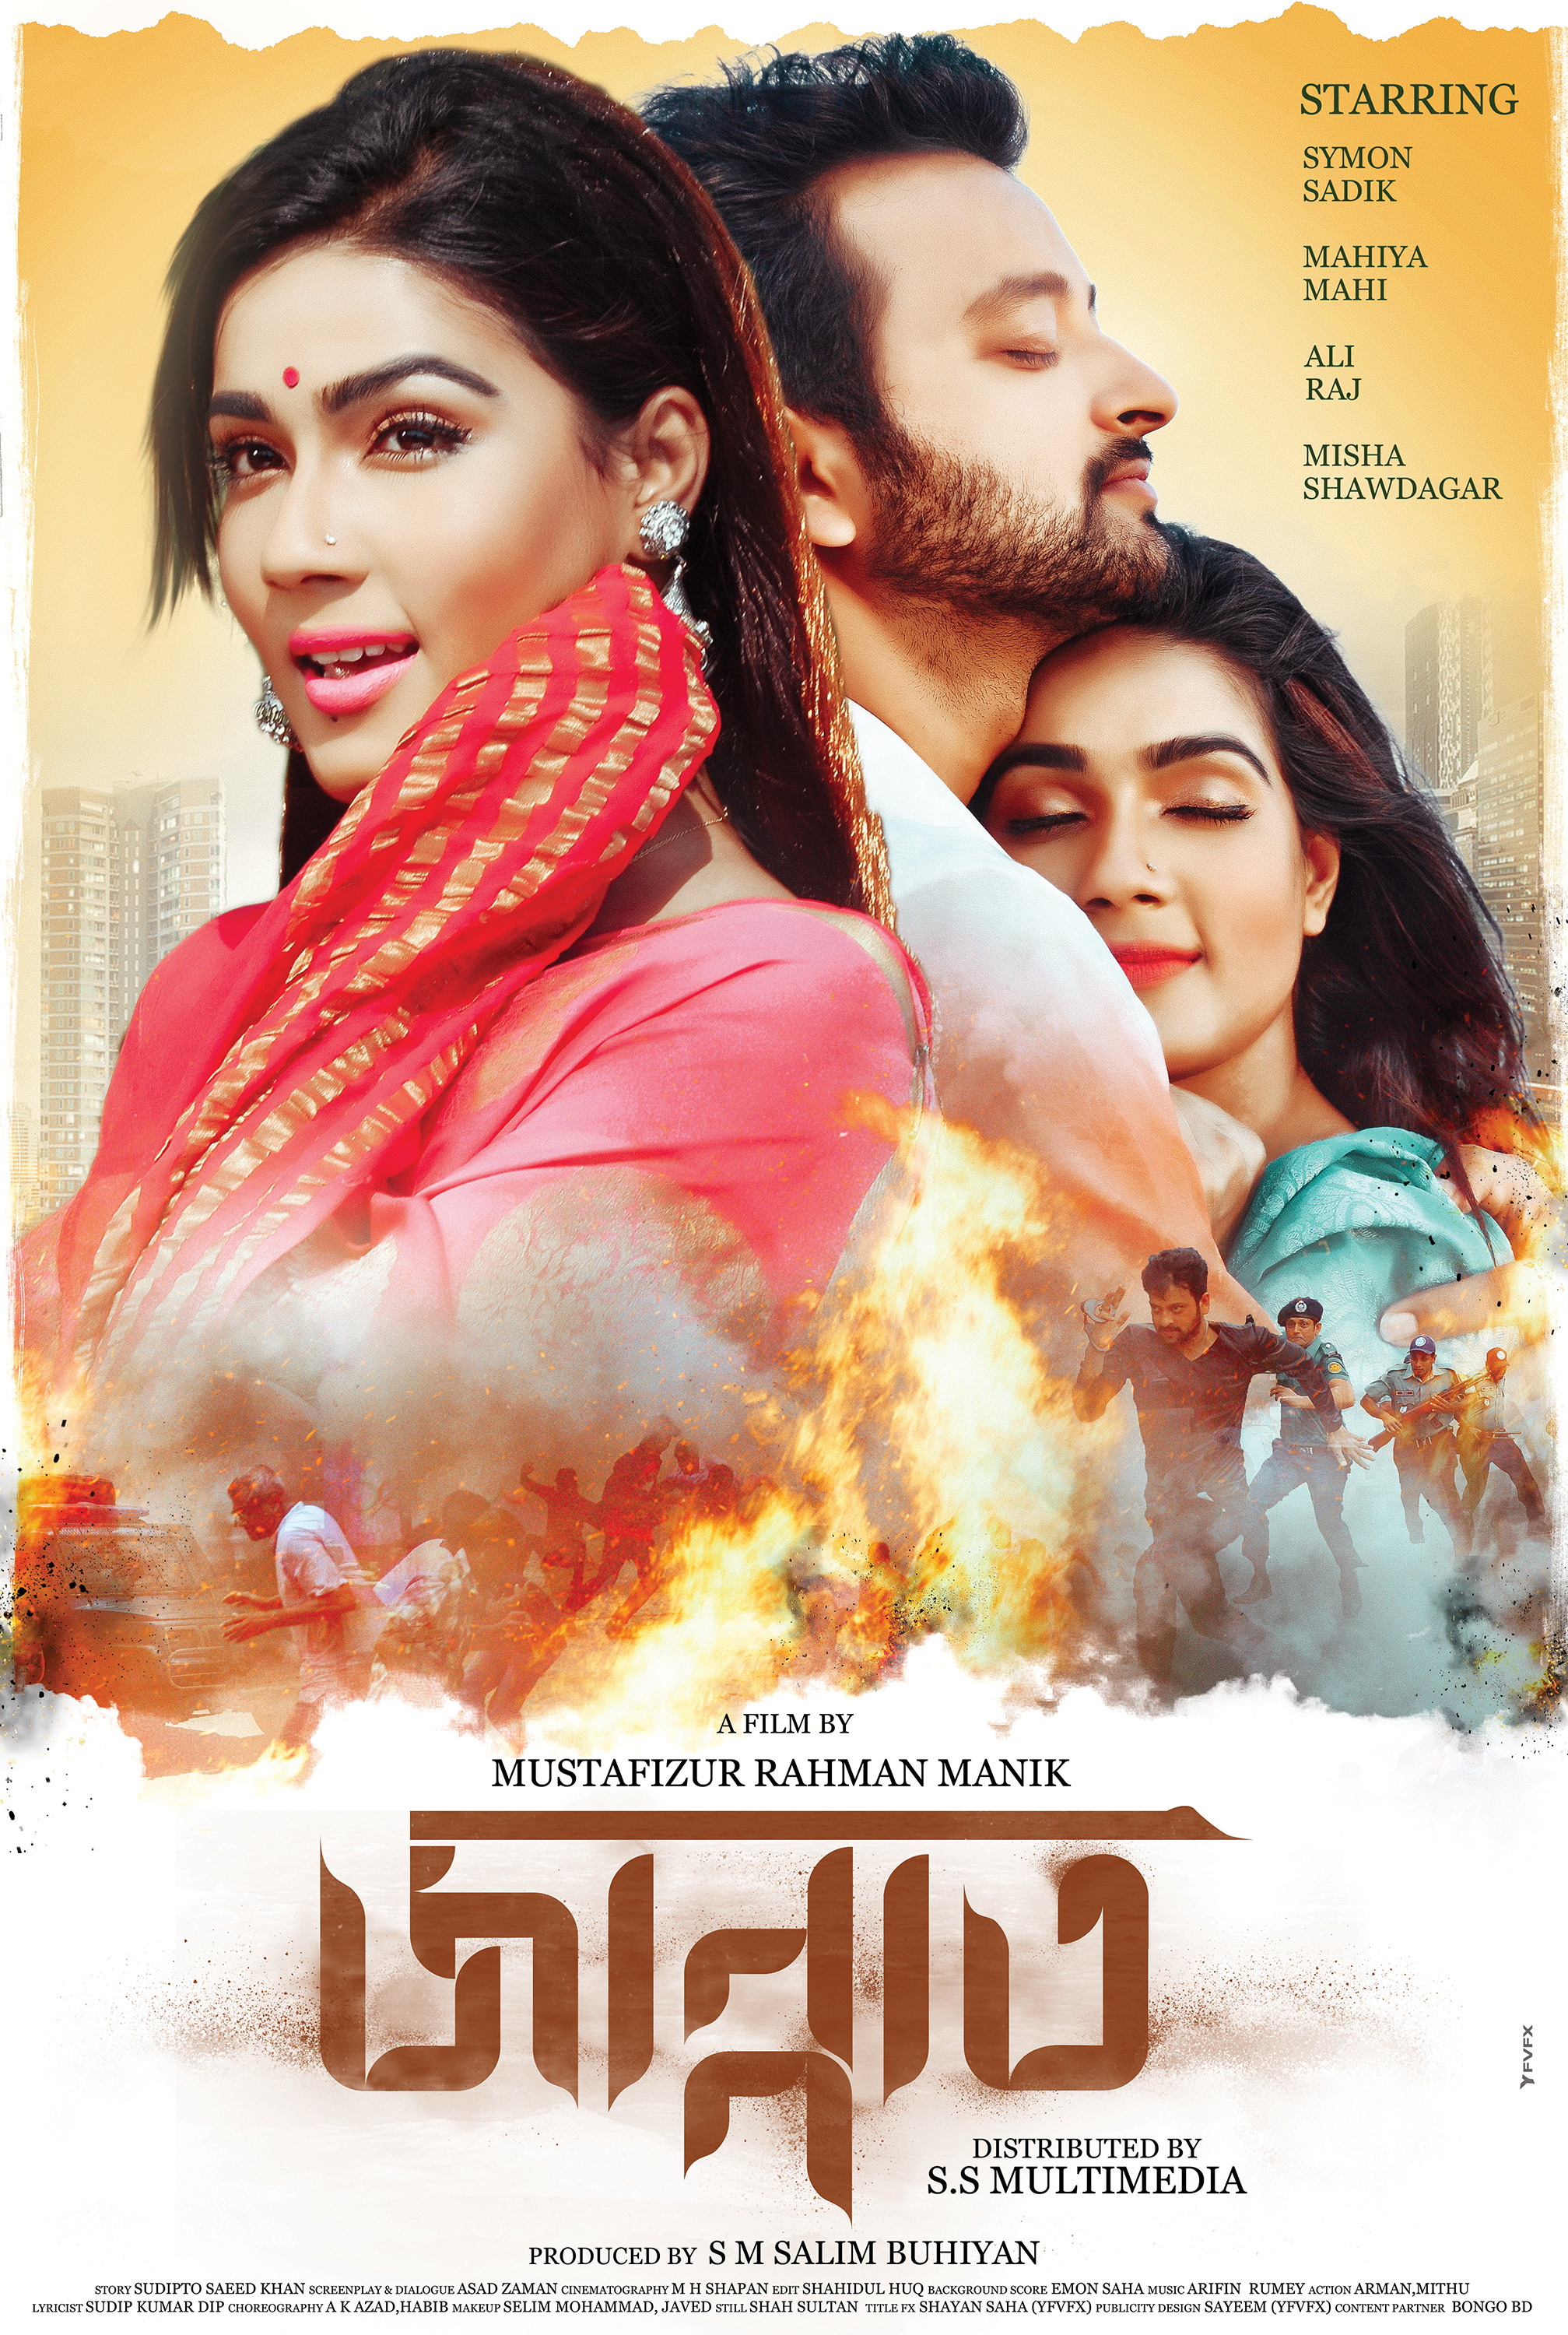 Mega Sized Movie Poster Image for Jannat (#5 of 10)